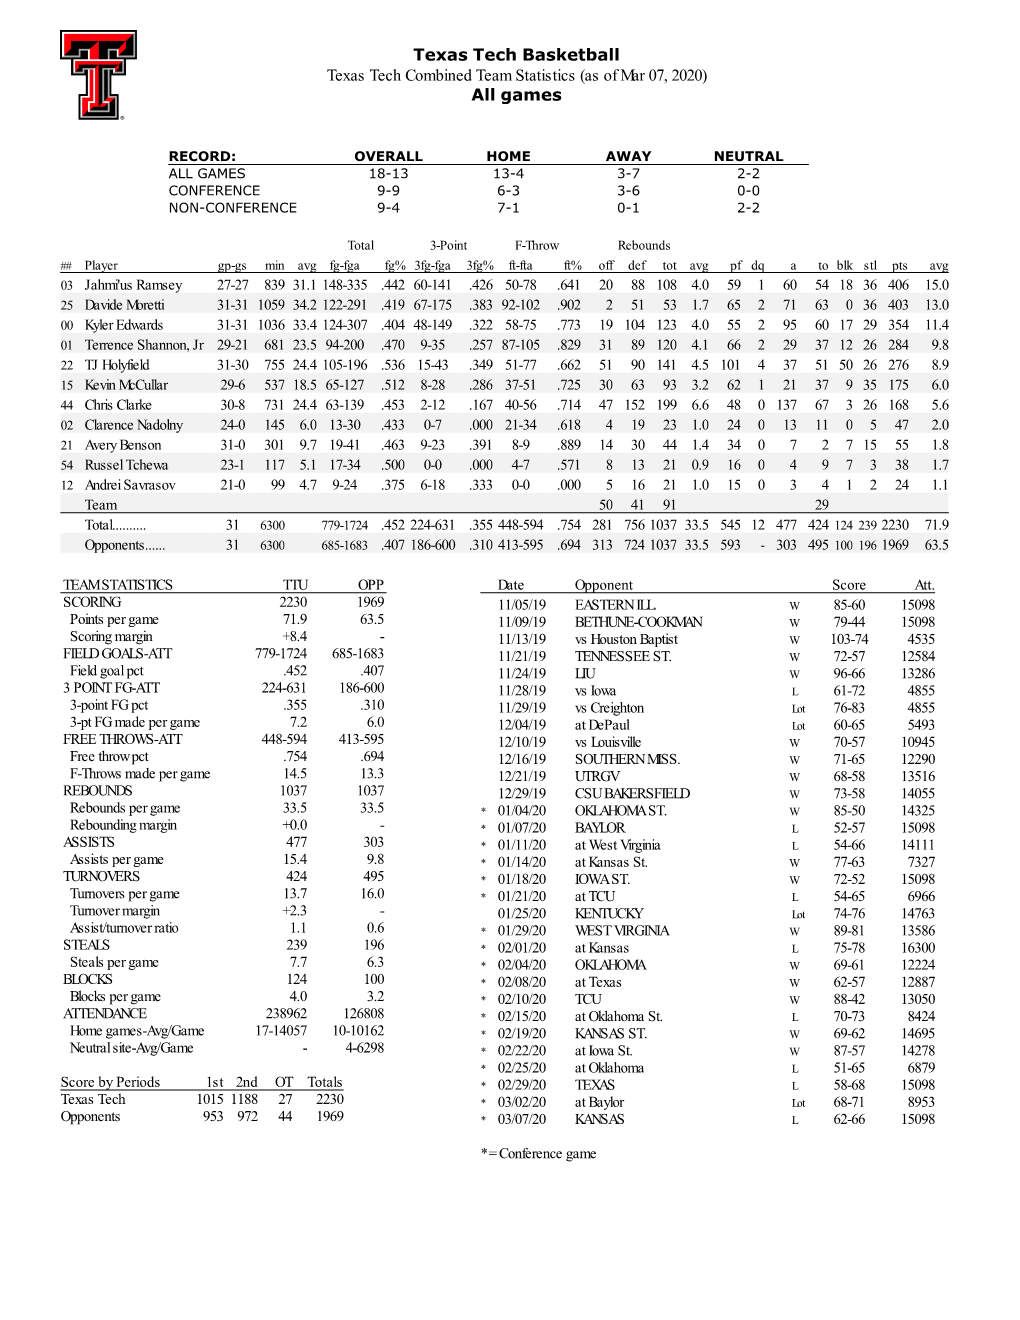 Texas Tech Basketball Texas Tech Combined Team Statistics (As of Mar 07, 2020) All Games